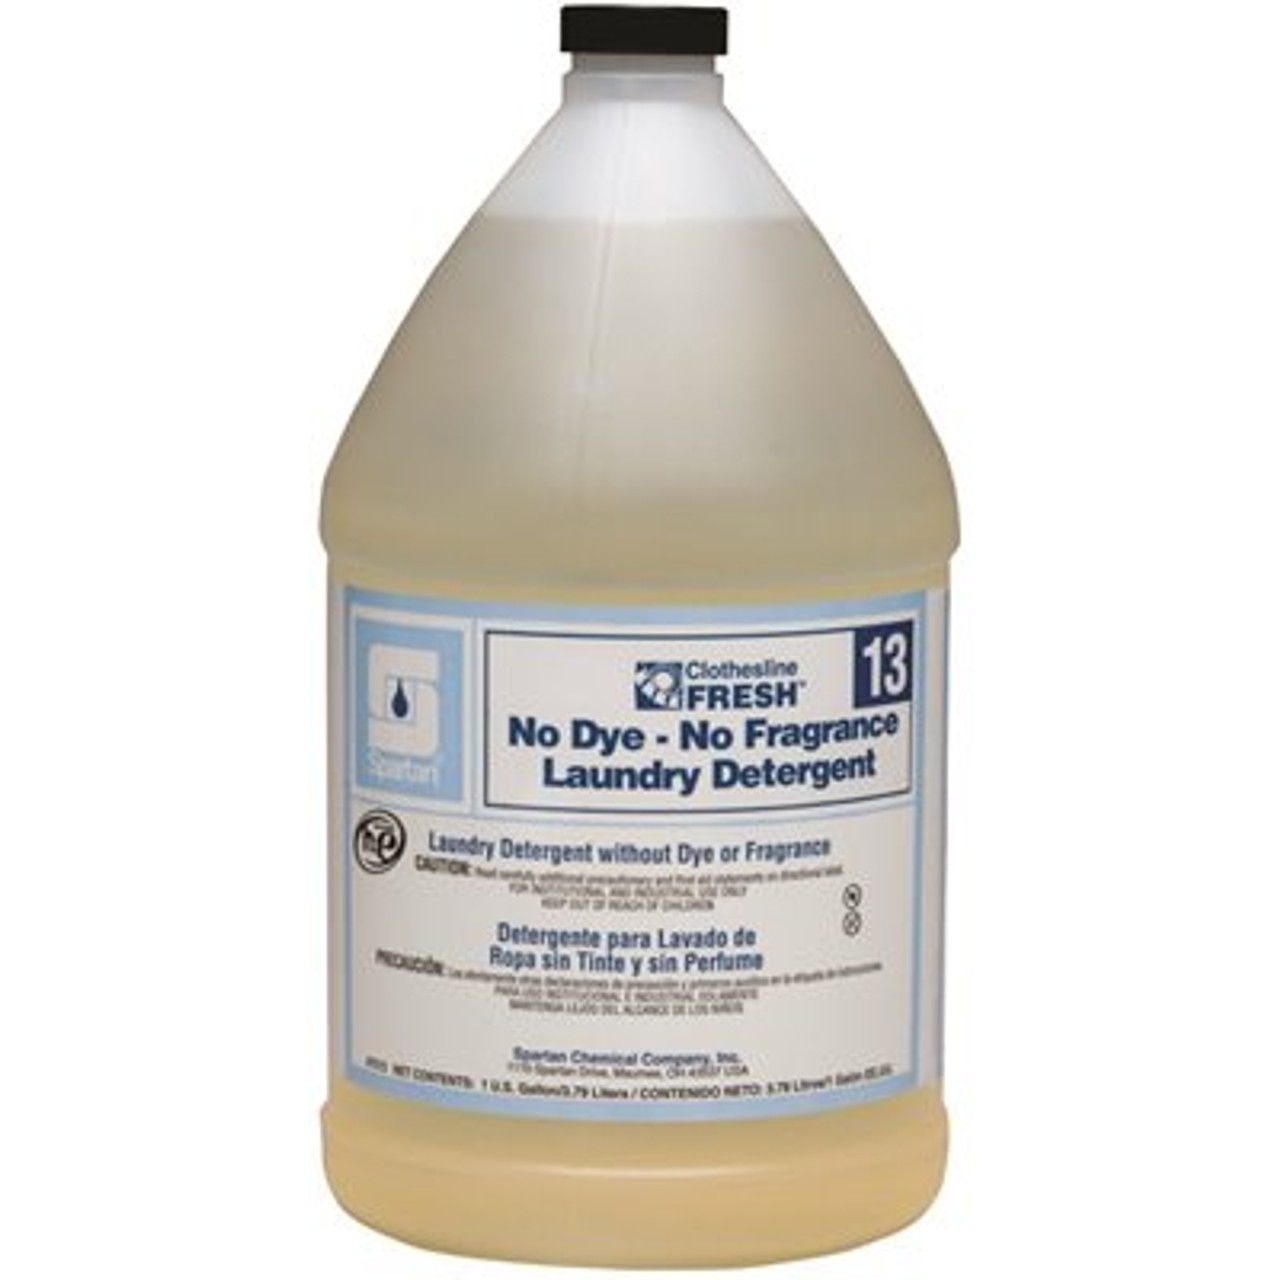 Spartan Chemical Co. Clothesline Fresh 1 Gallon No Dye-No Fragrance Laundry Detergent